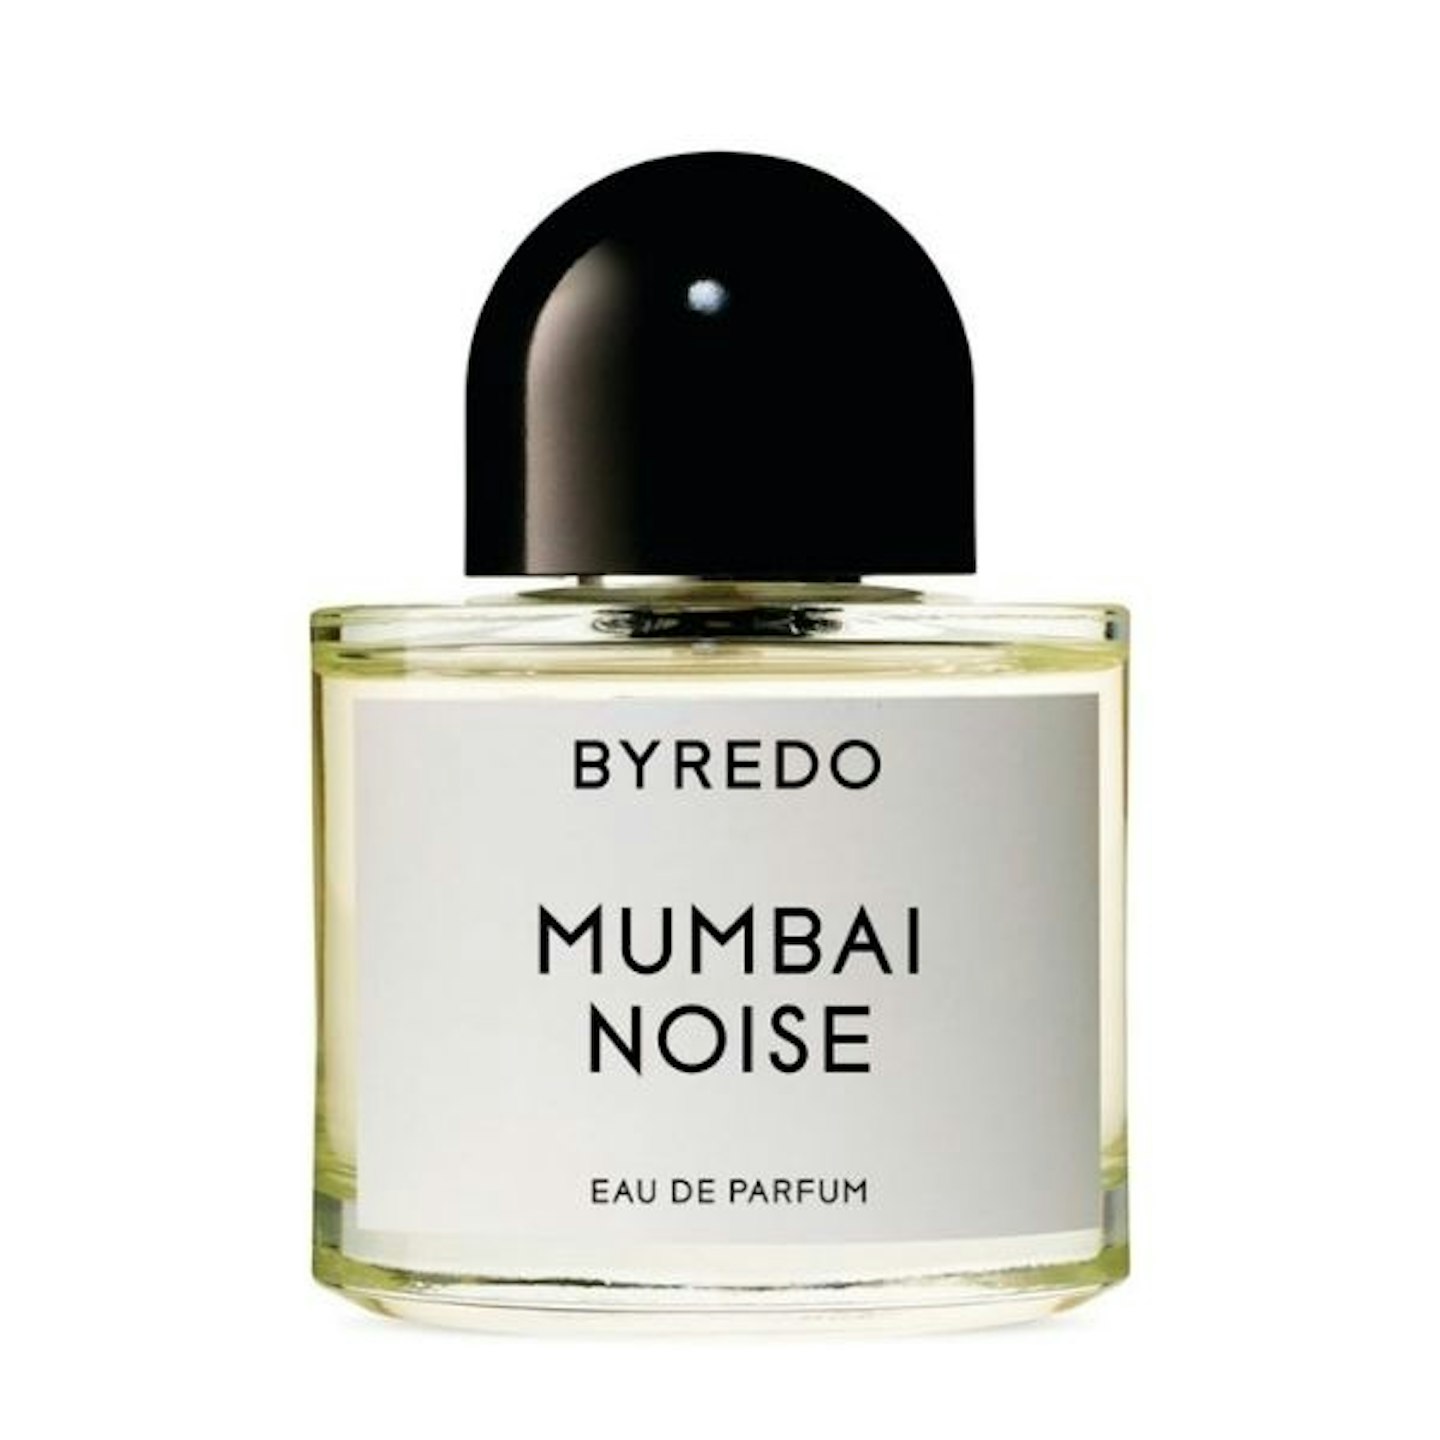 Byredo Mumbai Noise Eau de Parfum